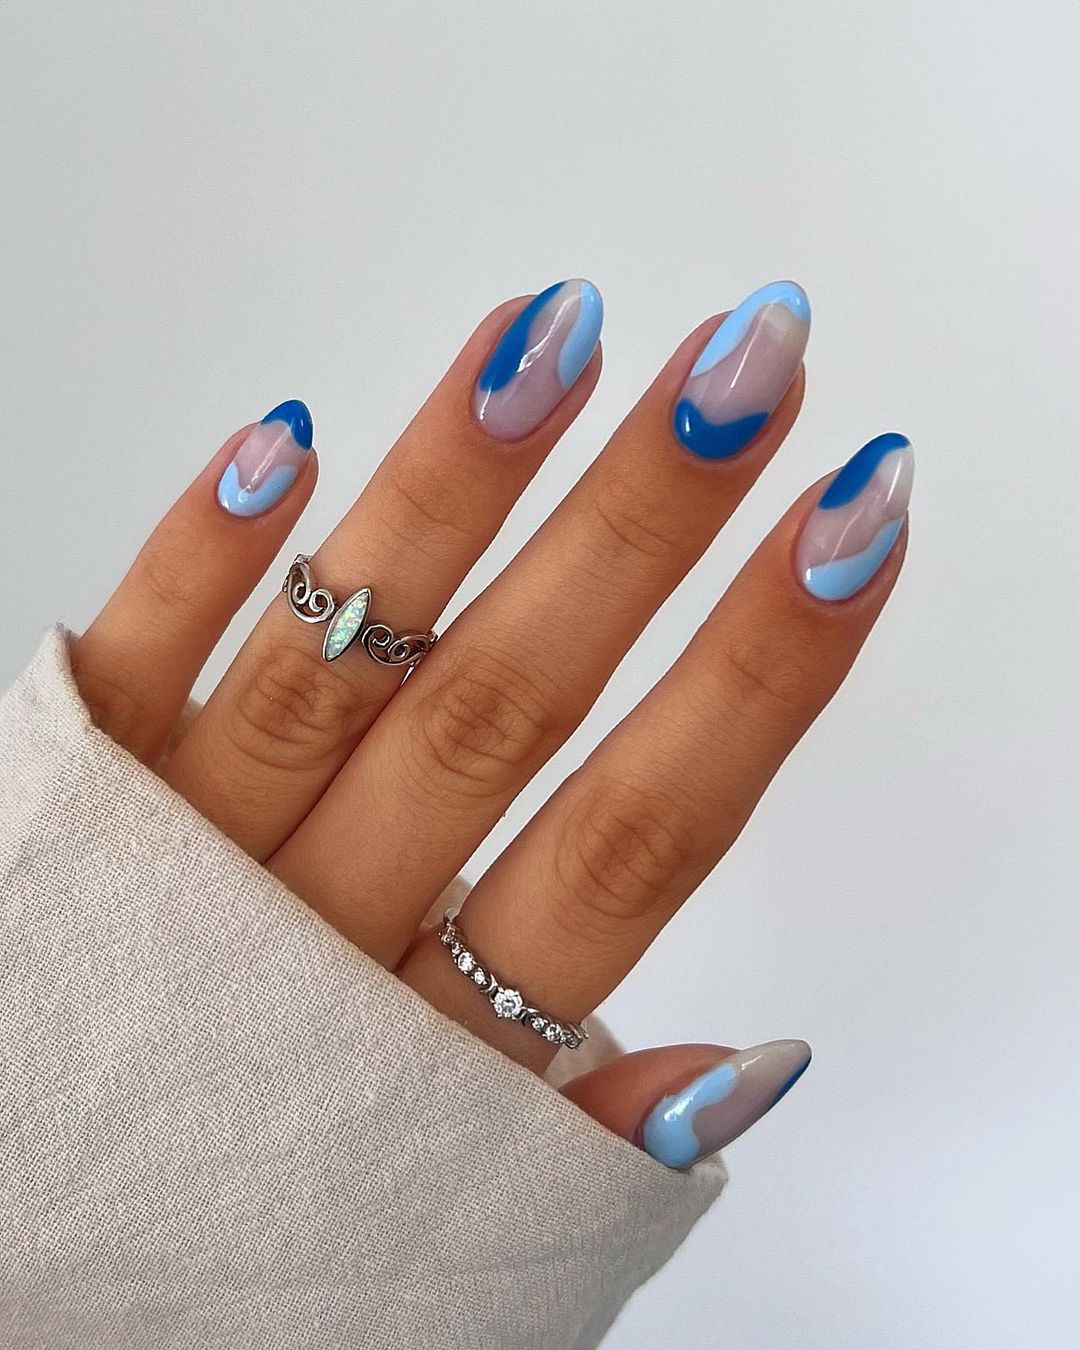 Short Round Nails with Blue Swirls